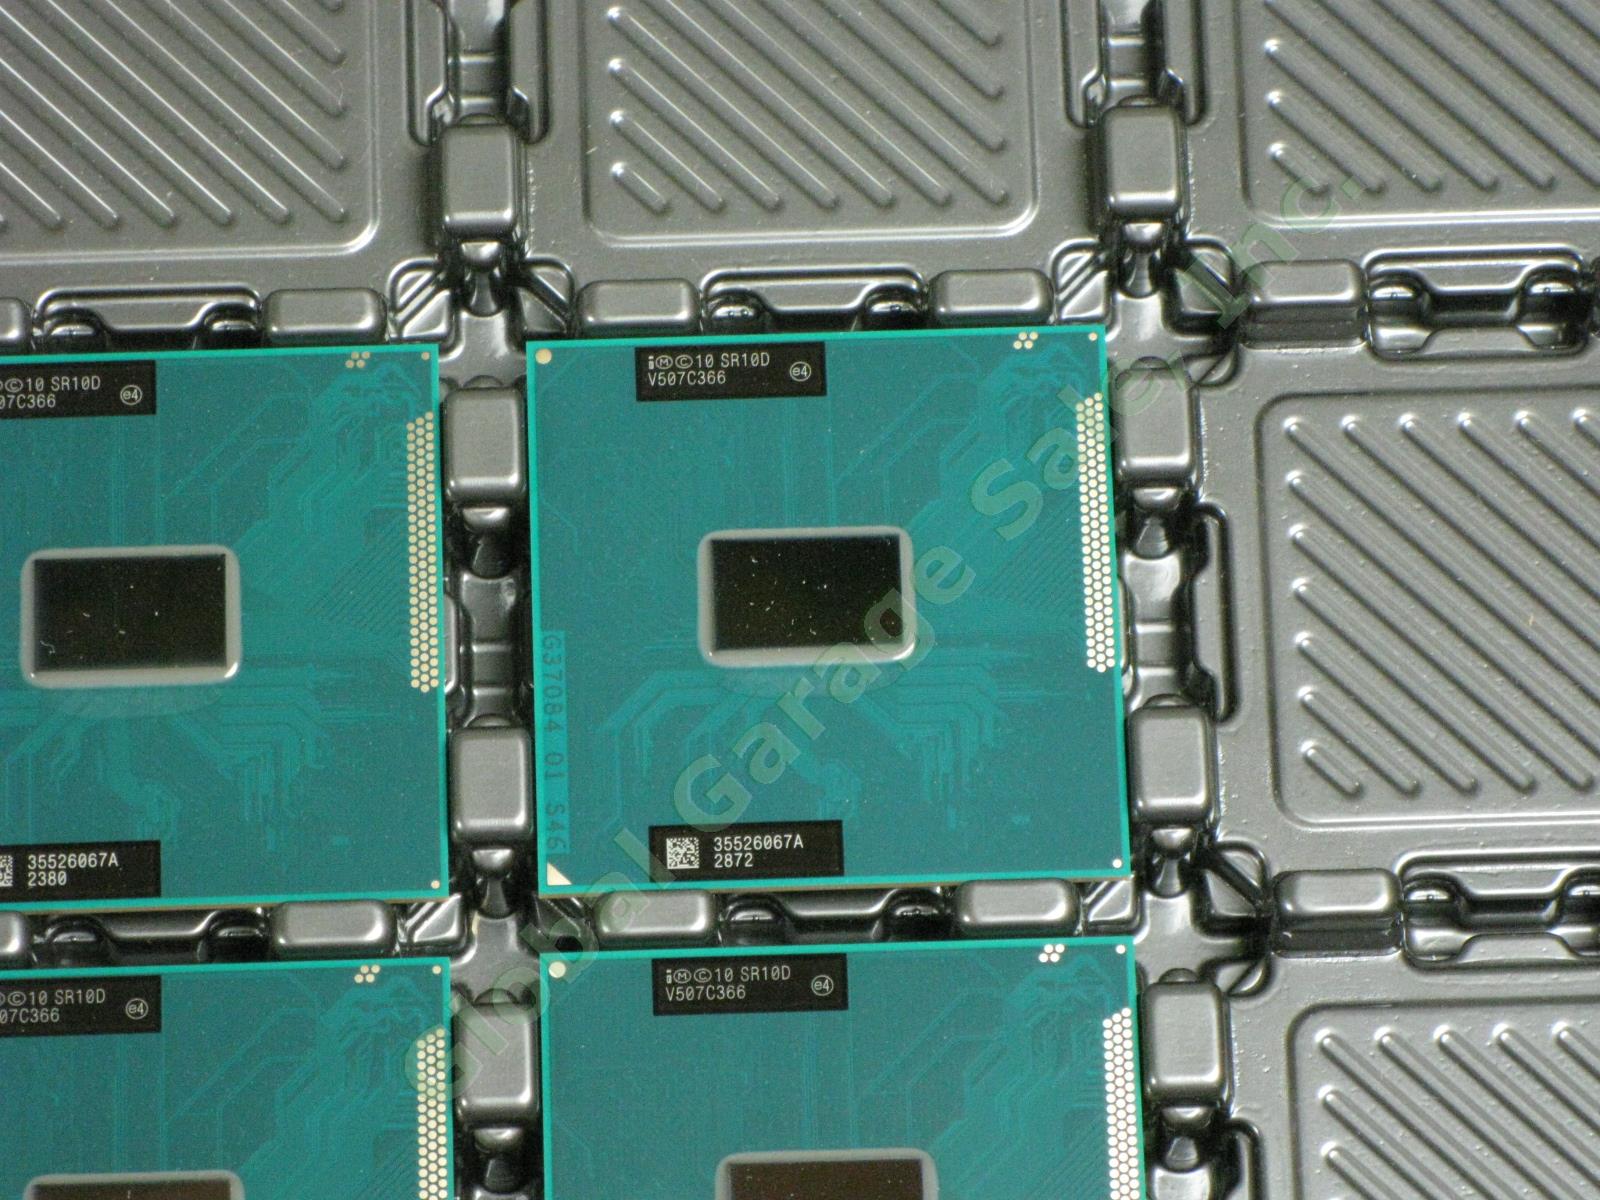 9 CPU Lot Intel Celeron Dual Core 1020E Ivy Bridge 2.2 GHz Processor G2 SR10D NR 1